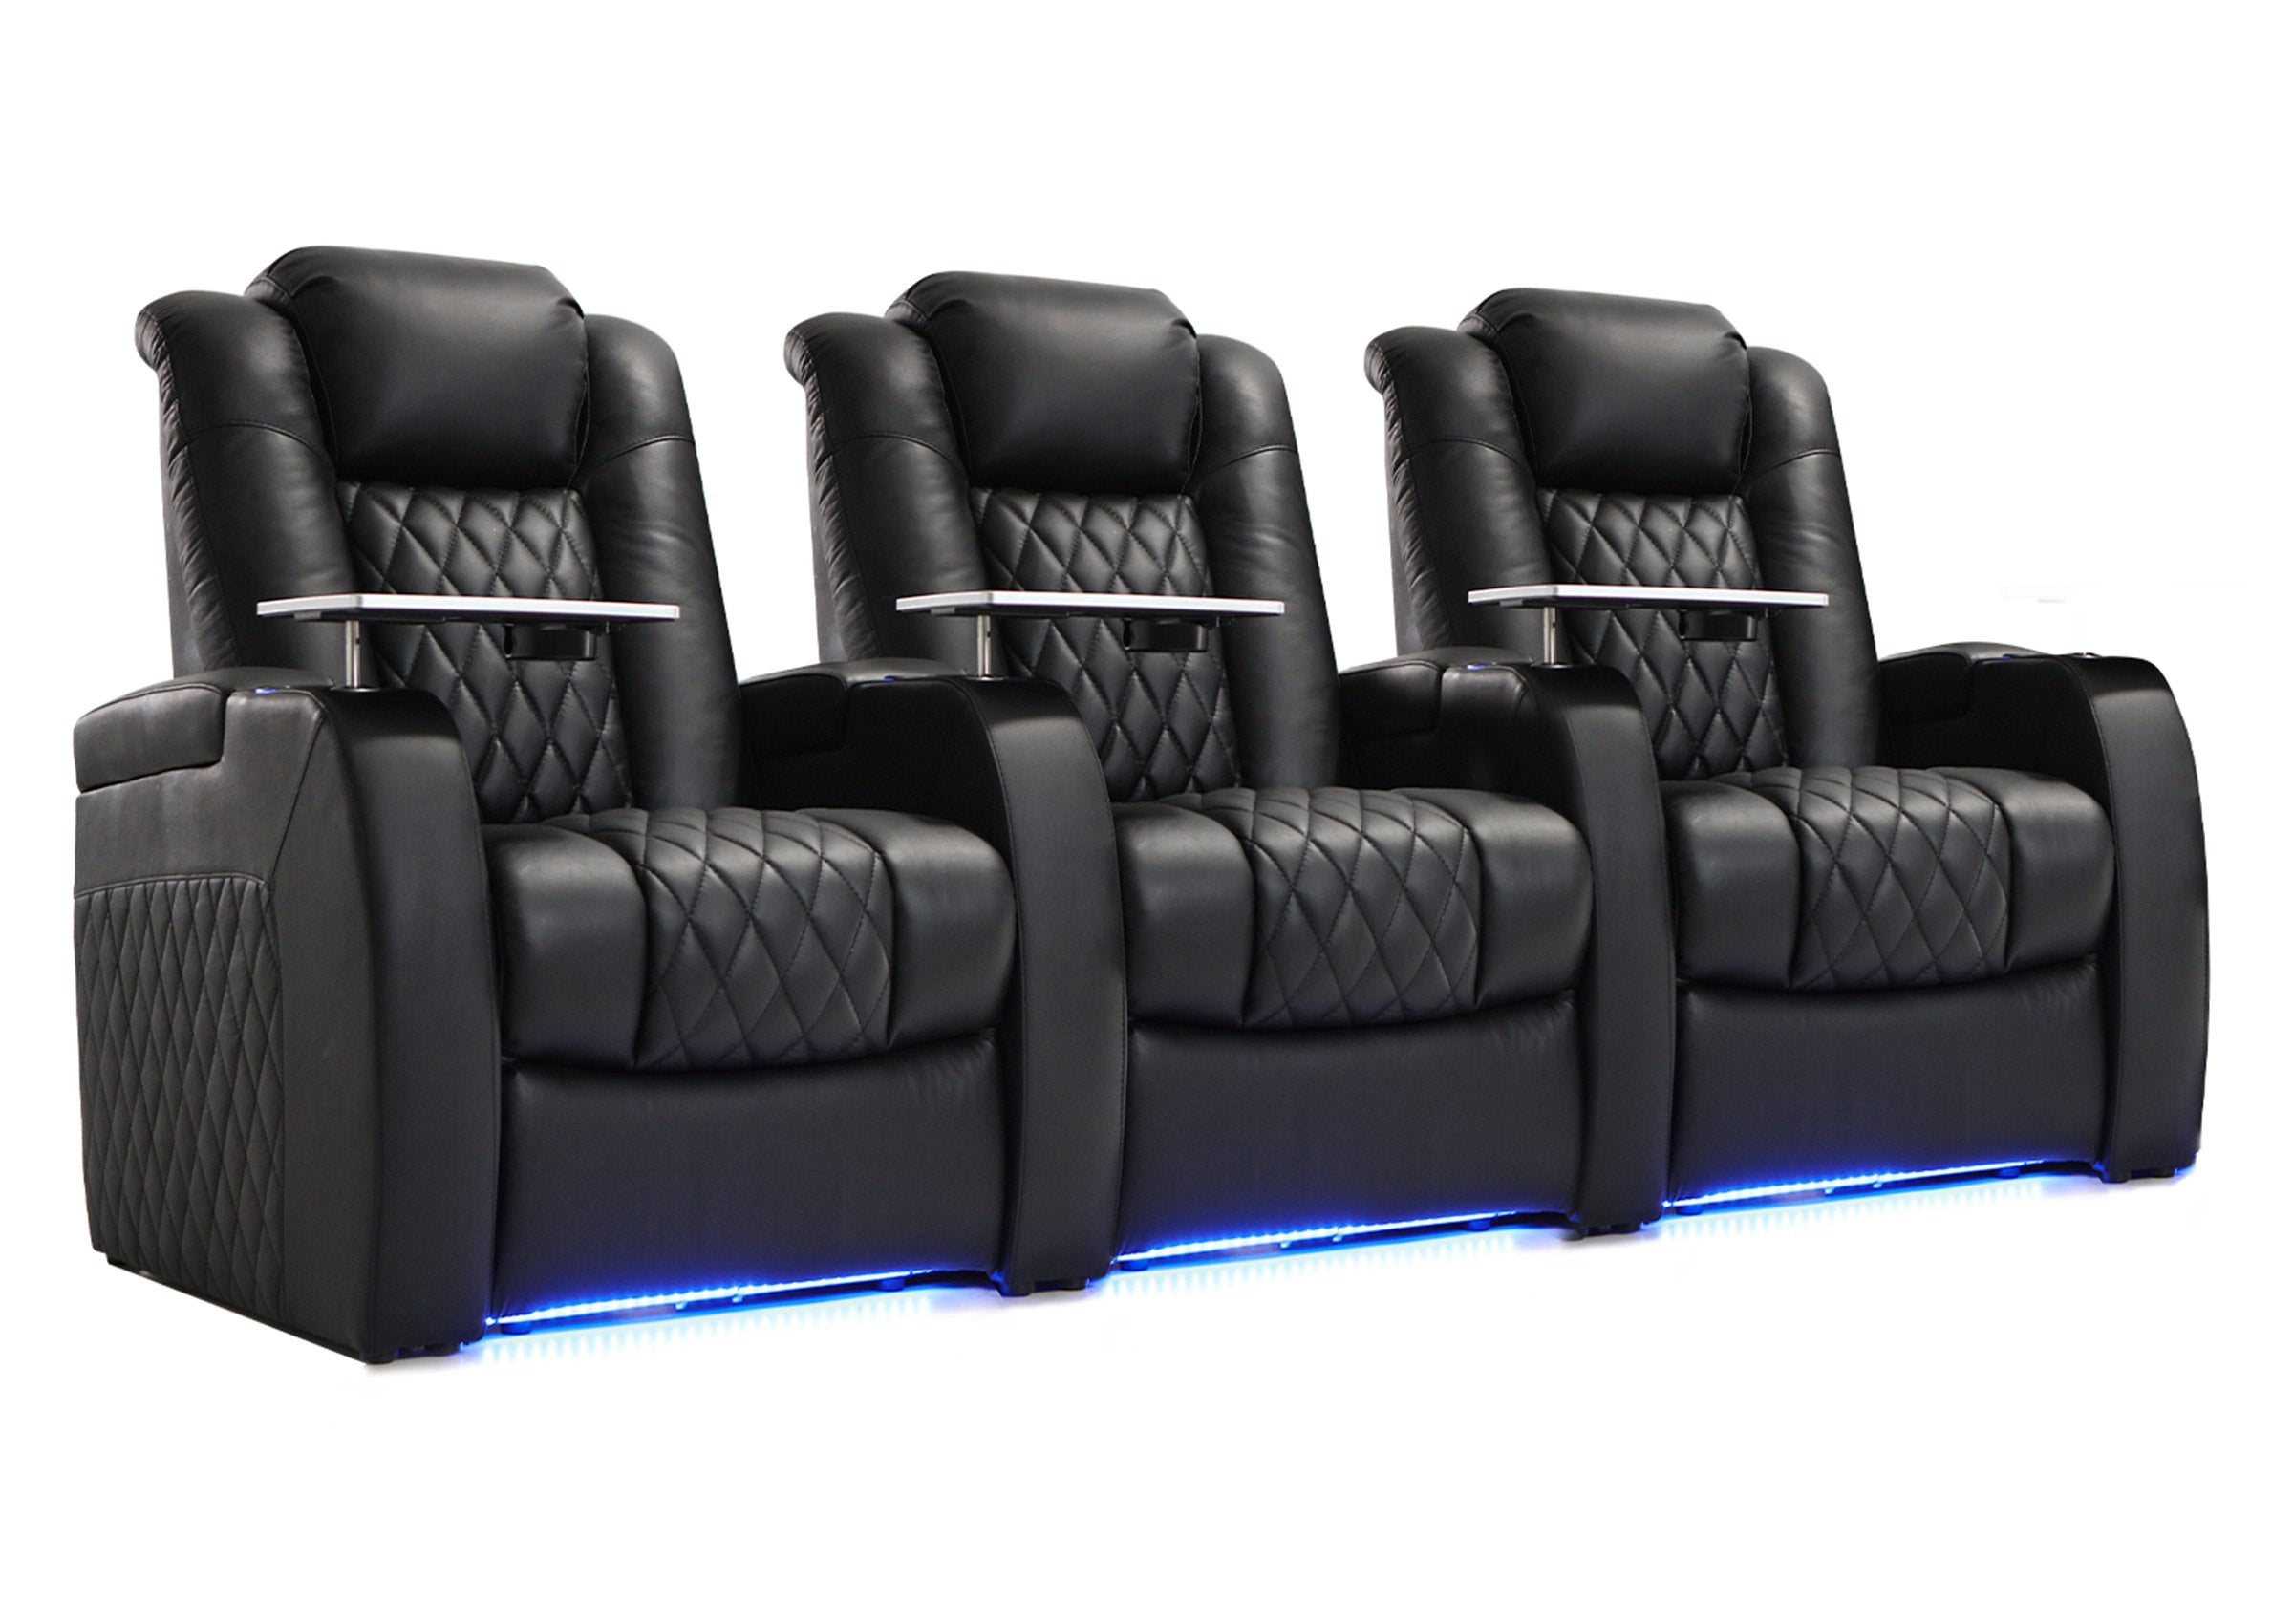 Weilianda Luxury Series Home Theater Seating